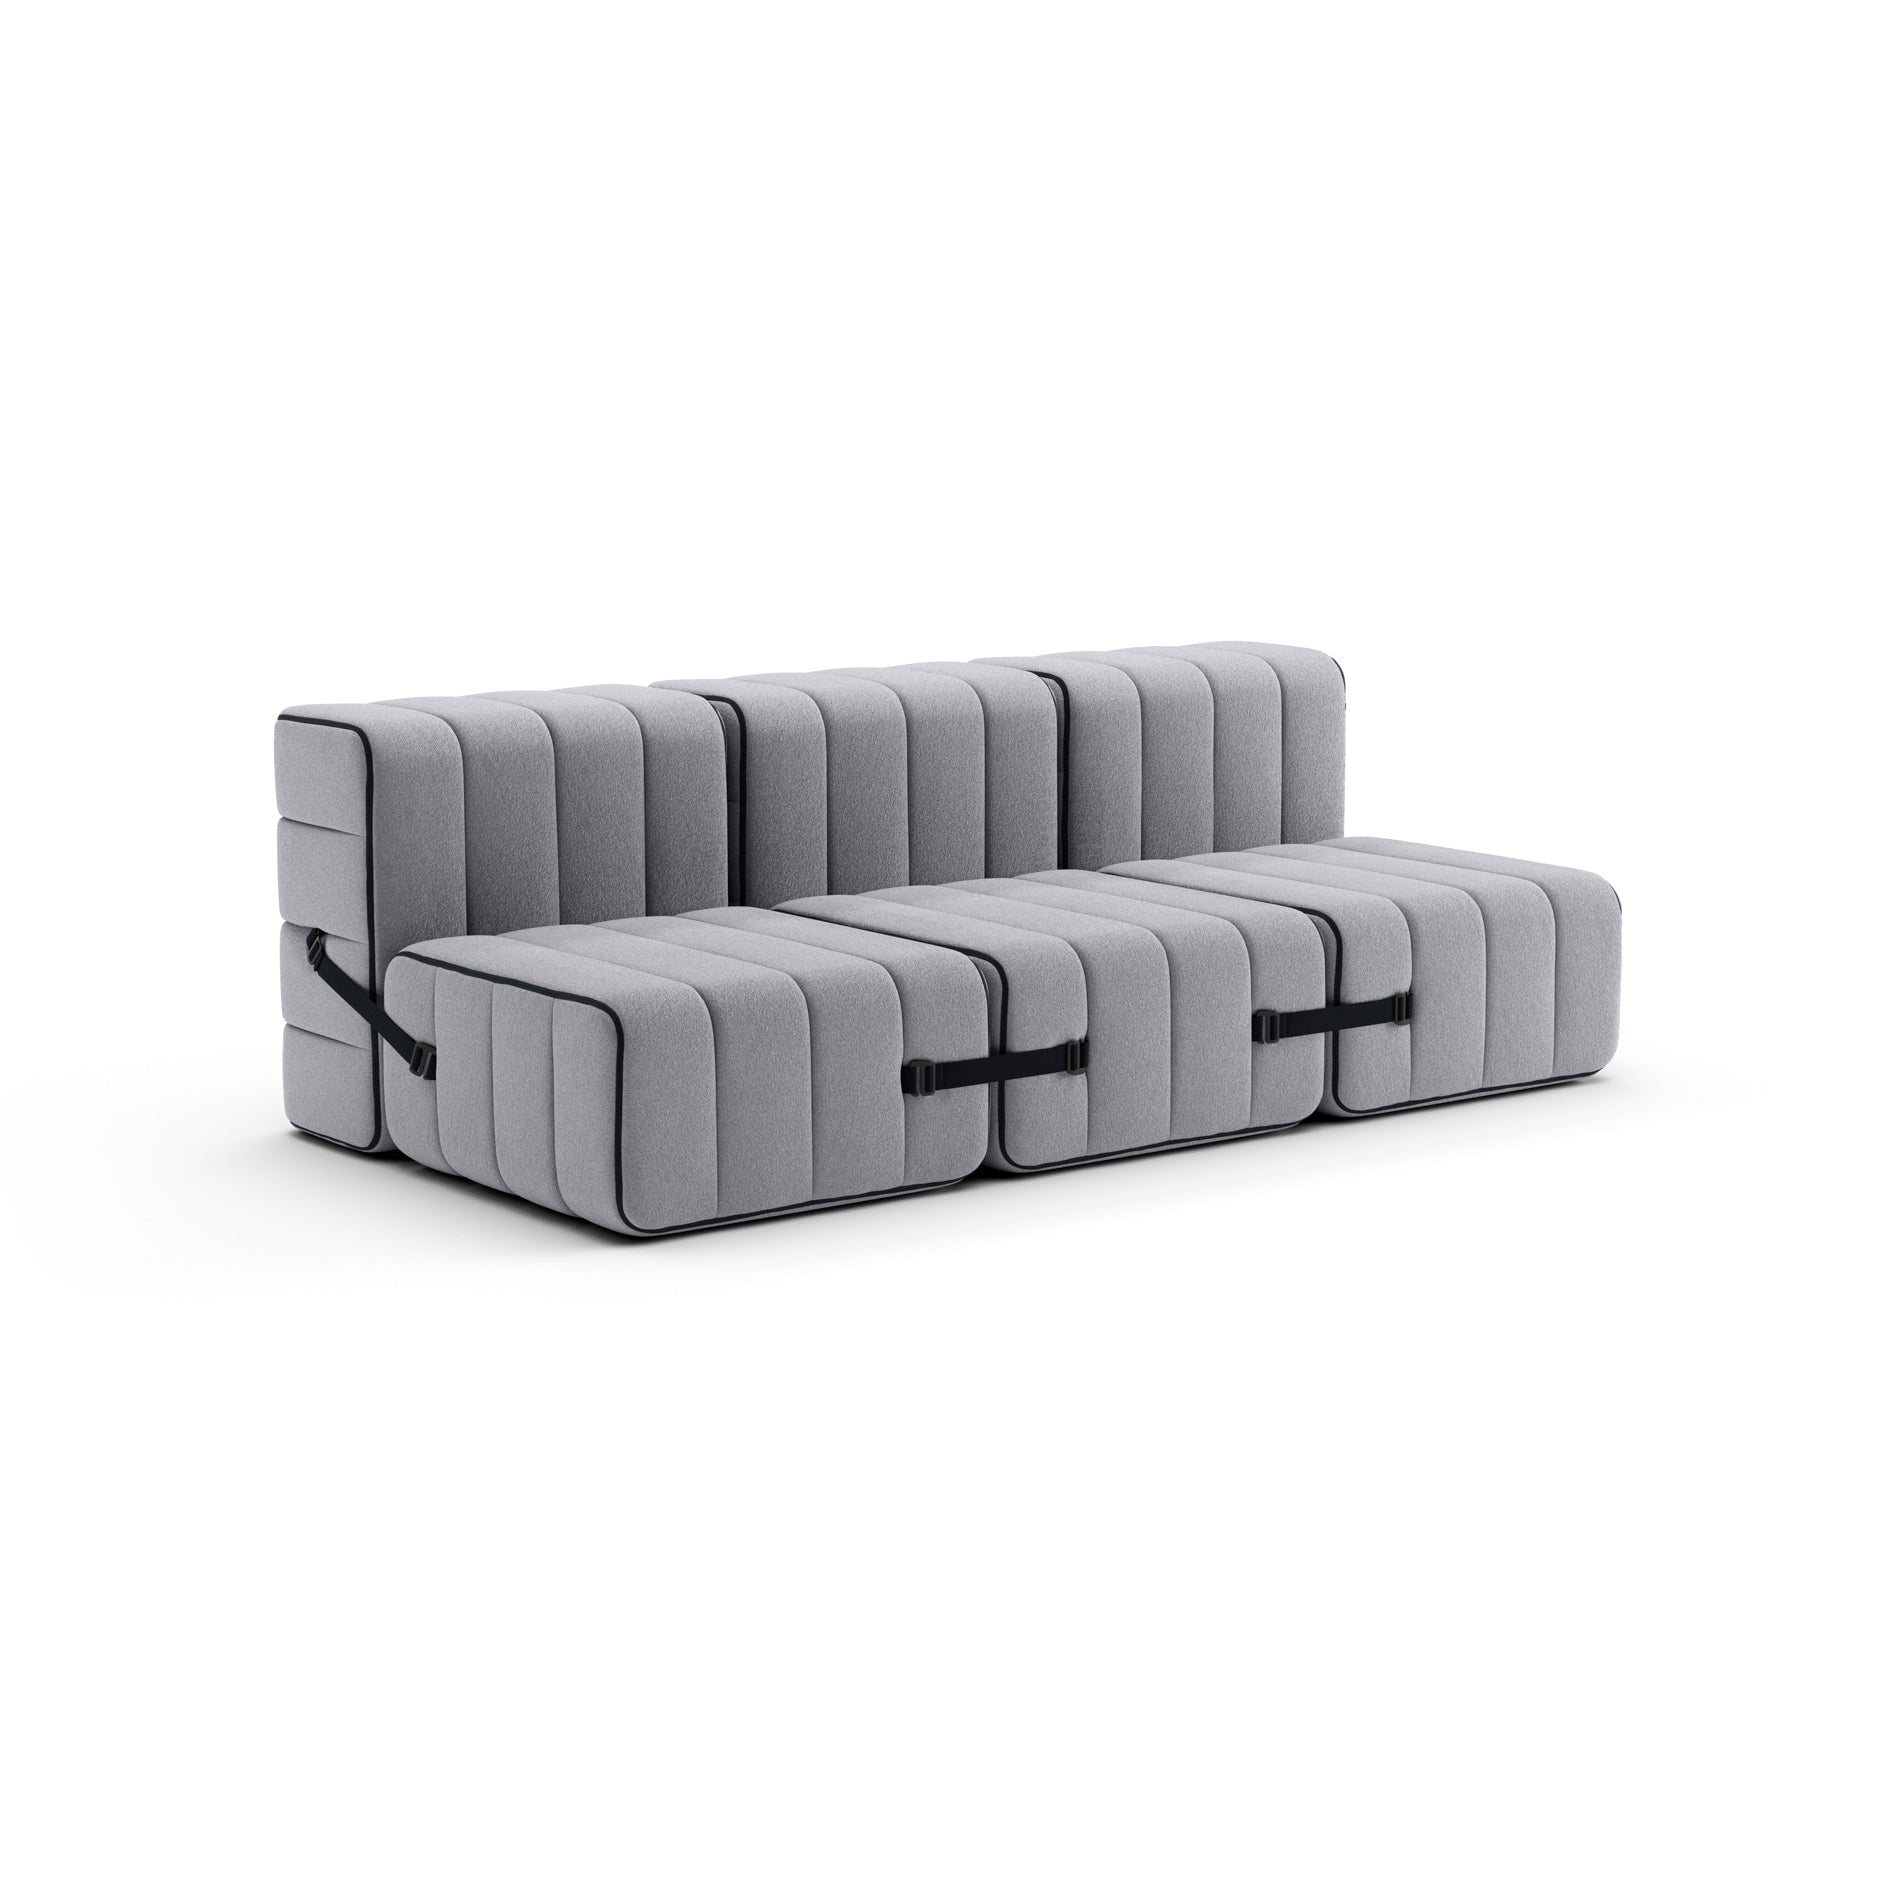 Curt Sofa System - Jet Light Grey - THAT COOL LIVING